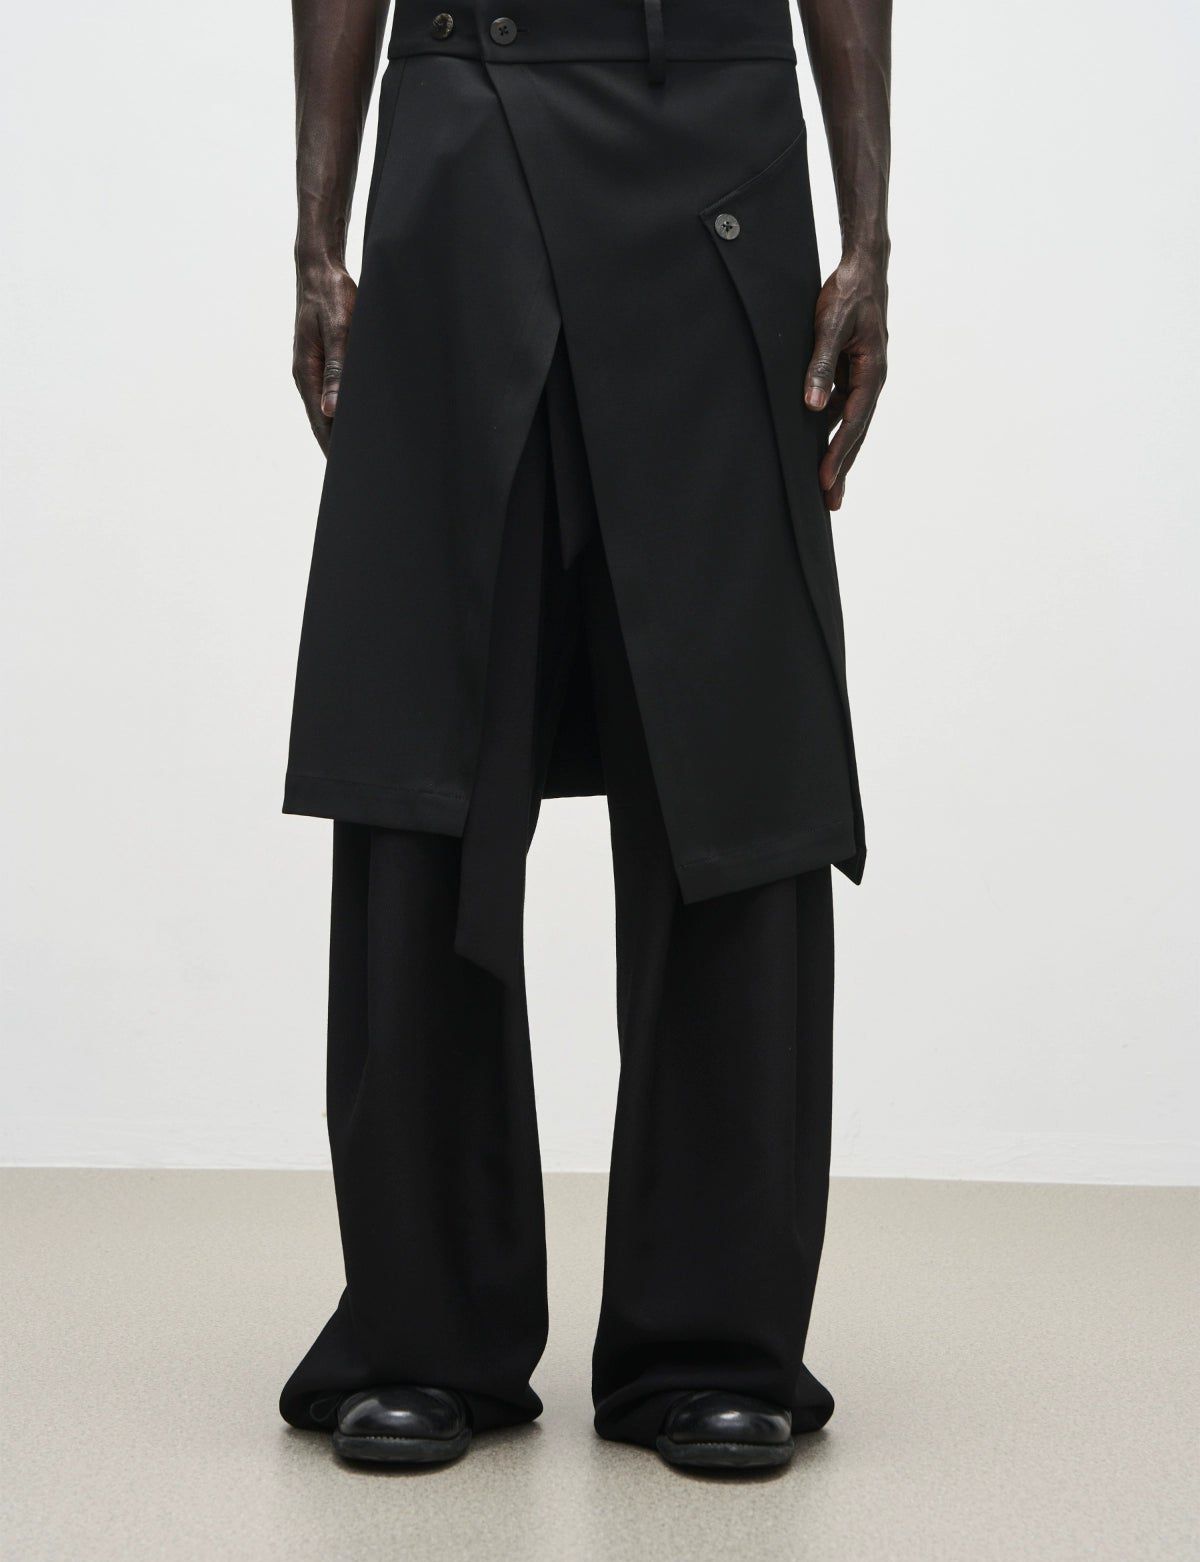 Buttoned Layer Versatile Skirt Korean Street Fashion Skirt By 7440 37 1 Shop Online at OH Vault